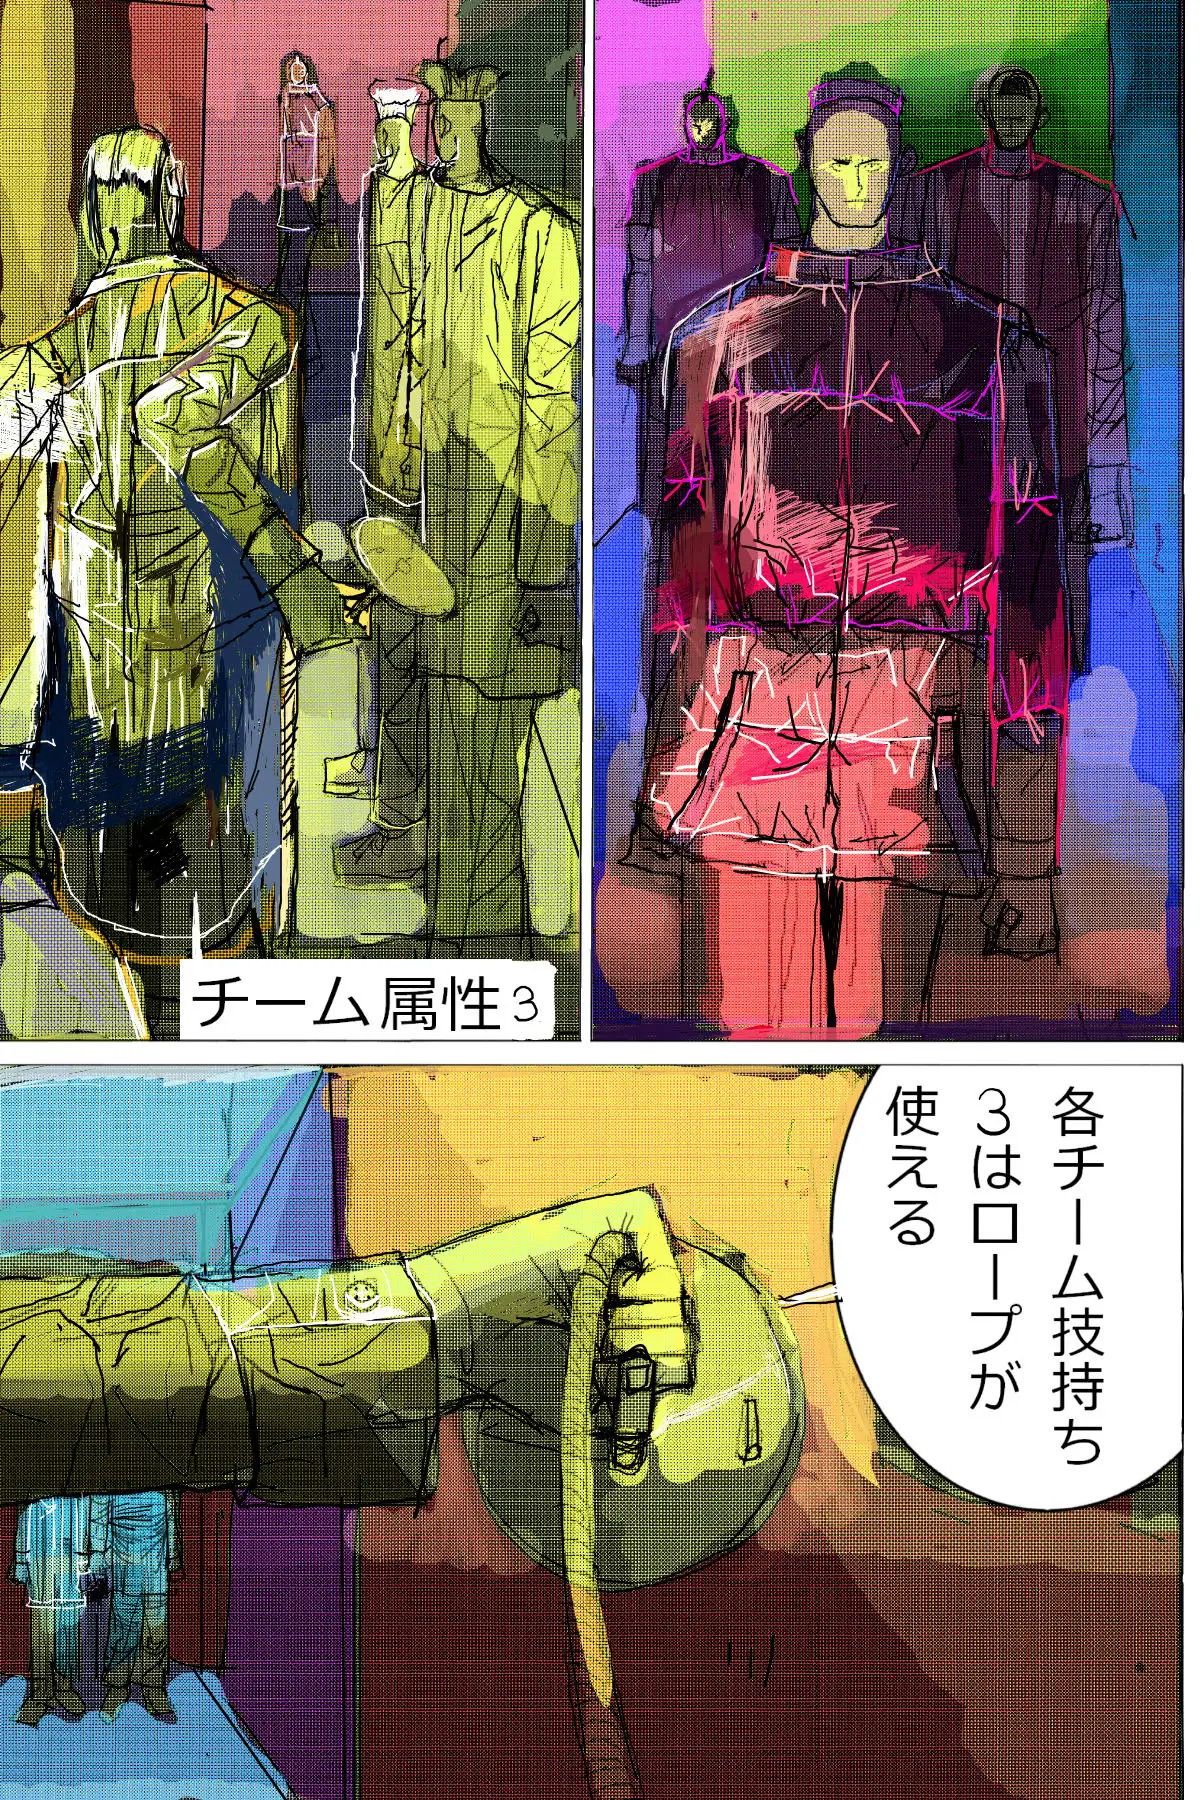 [漫画石垣]Rollscaffold1